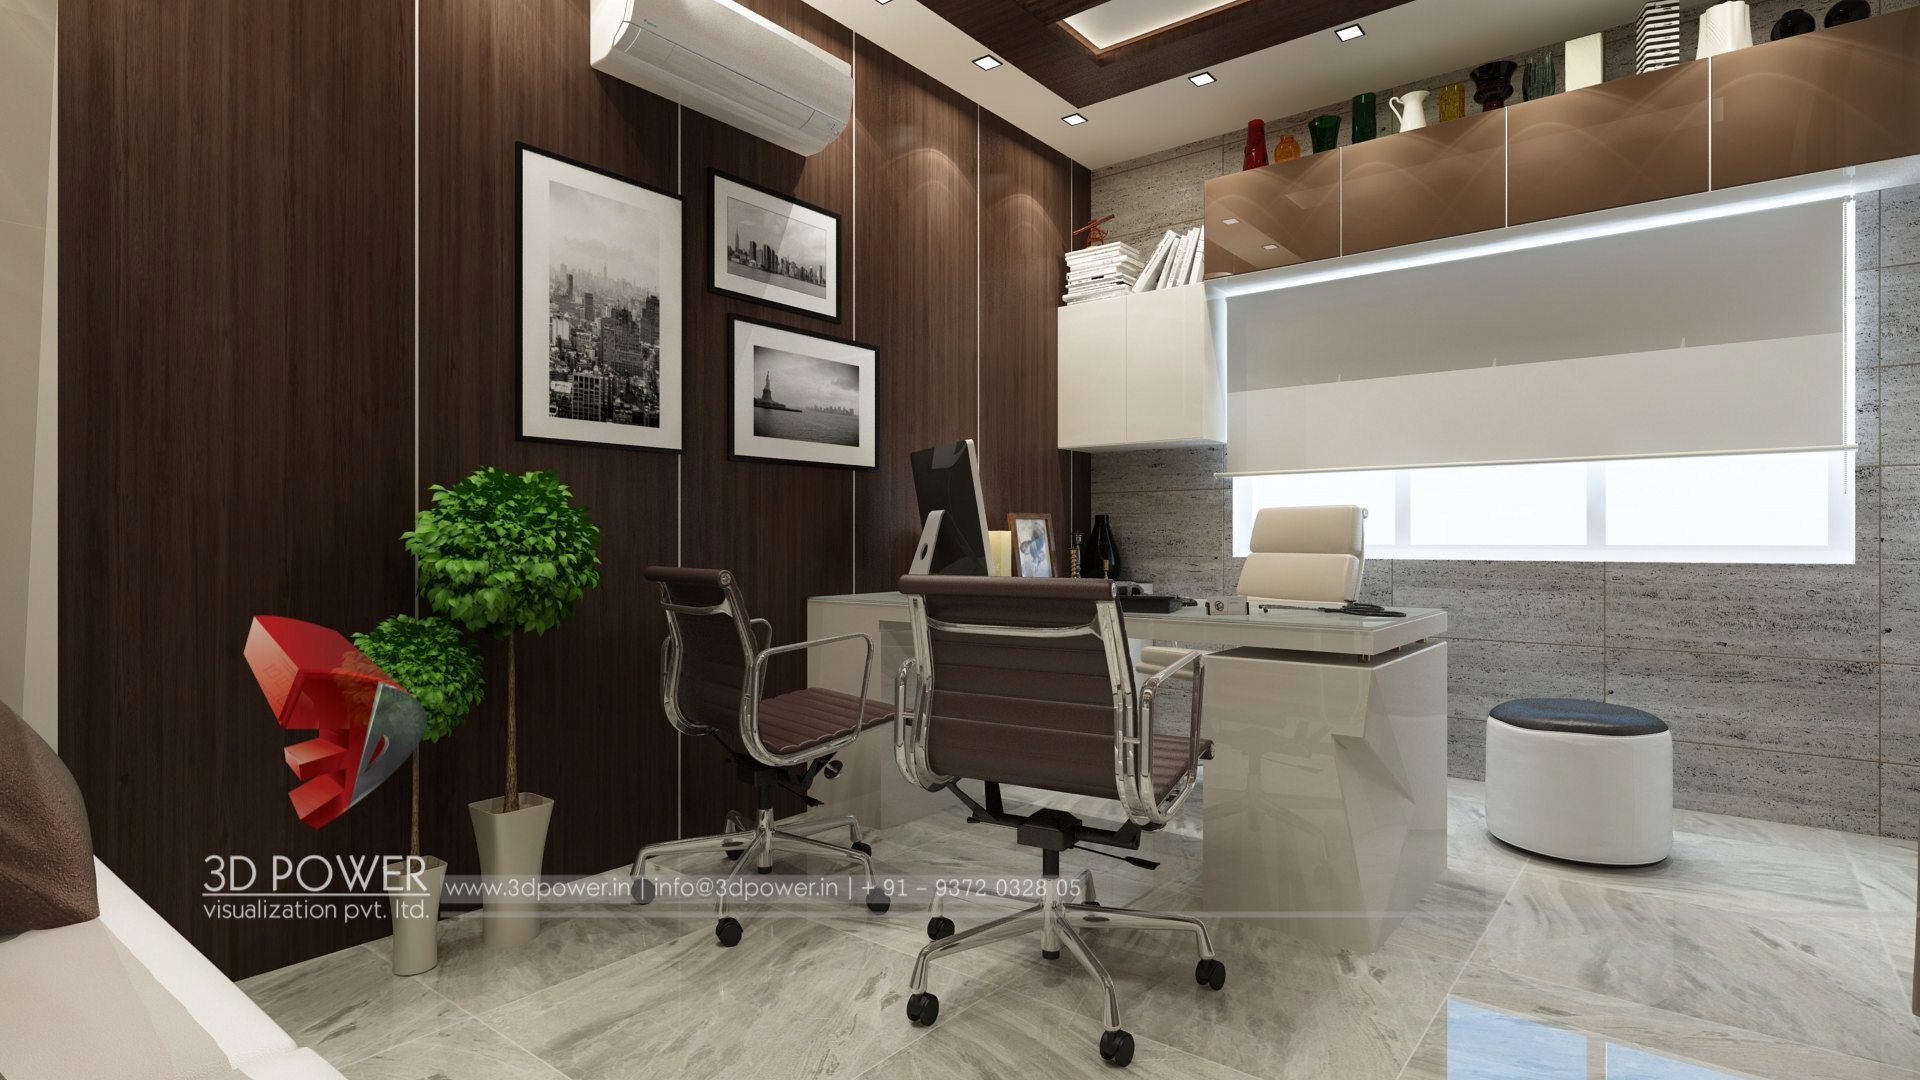 3D Interior Design & Rendering Services | Bungalow & Home ...